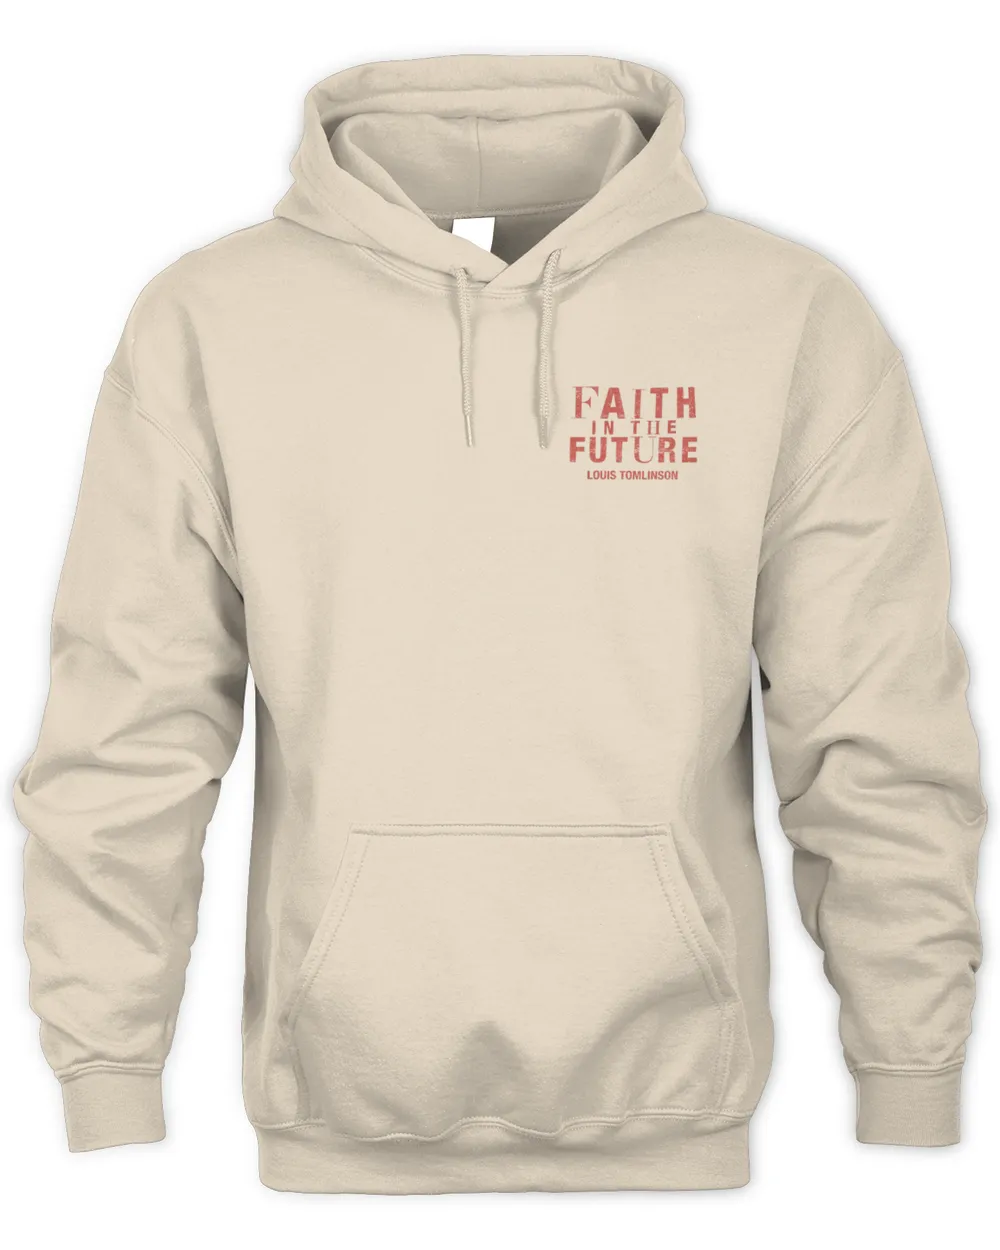 faith in the future hoodie louis tomlinson